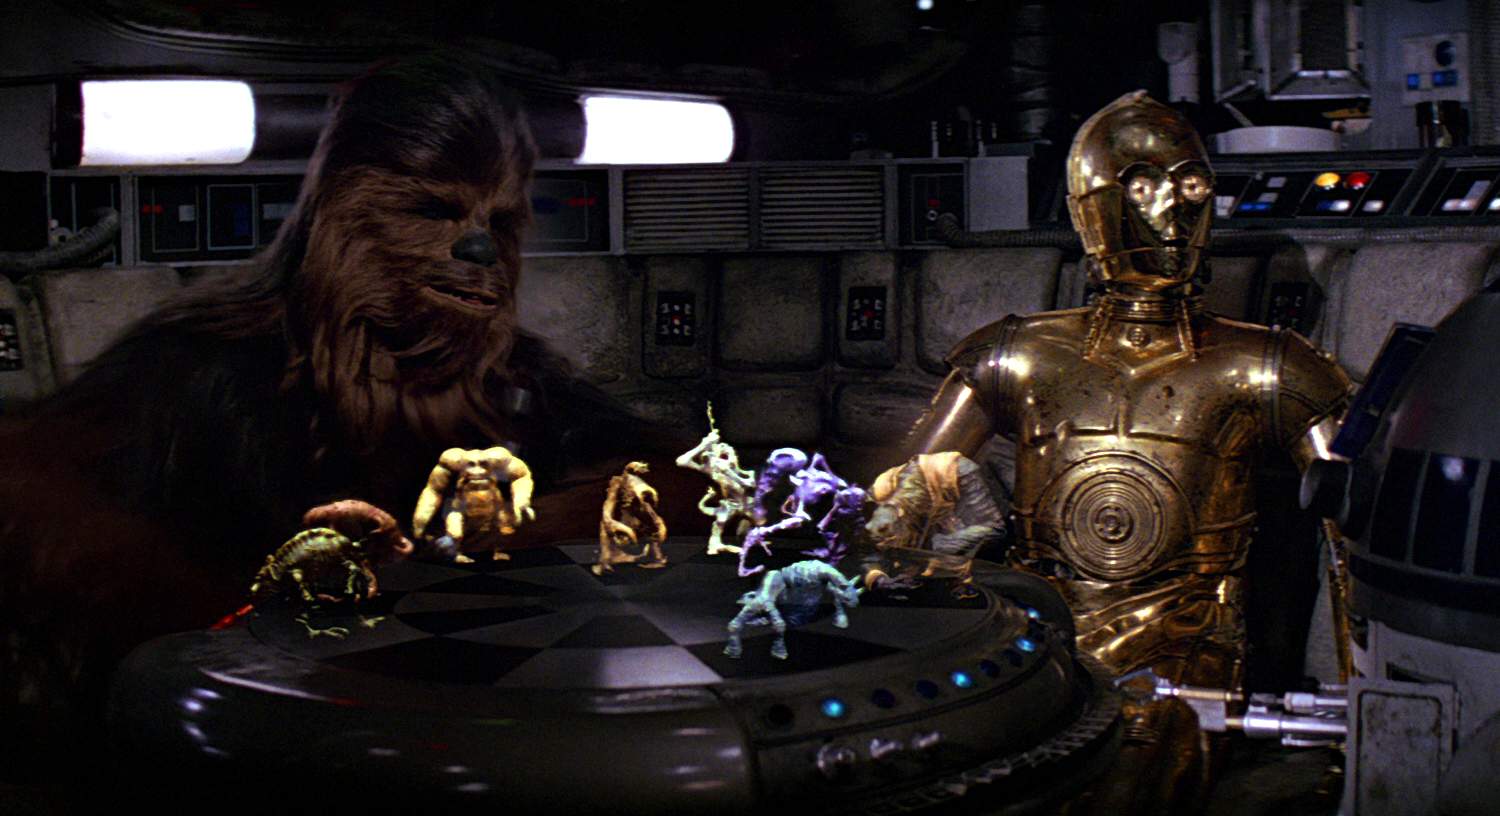 Chewie and C-3PO playing Dejarik in Star Wars